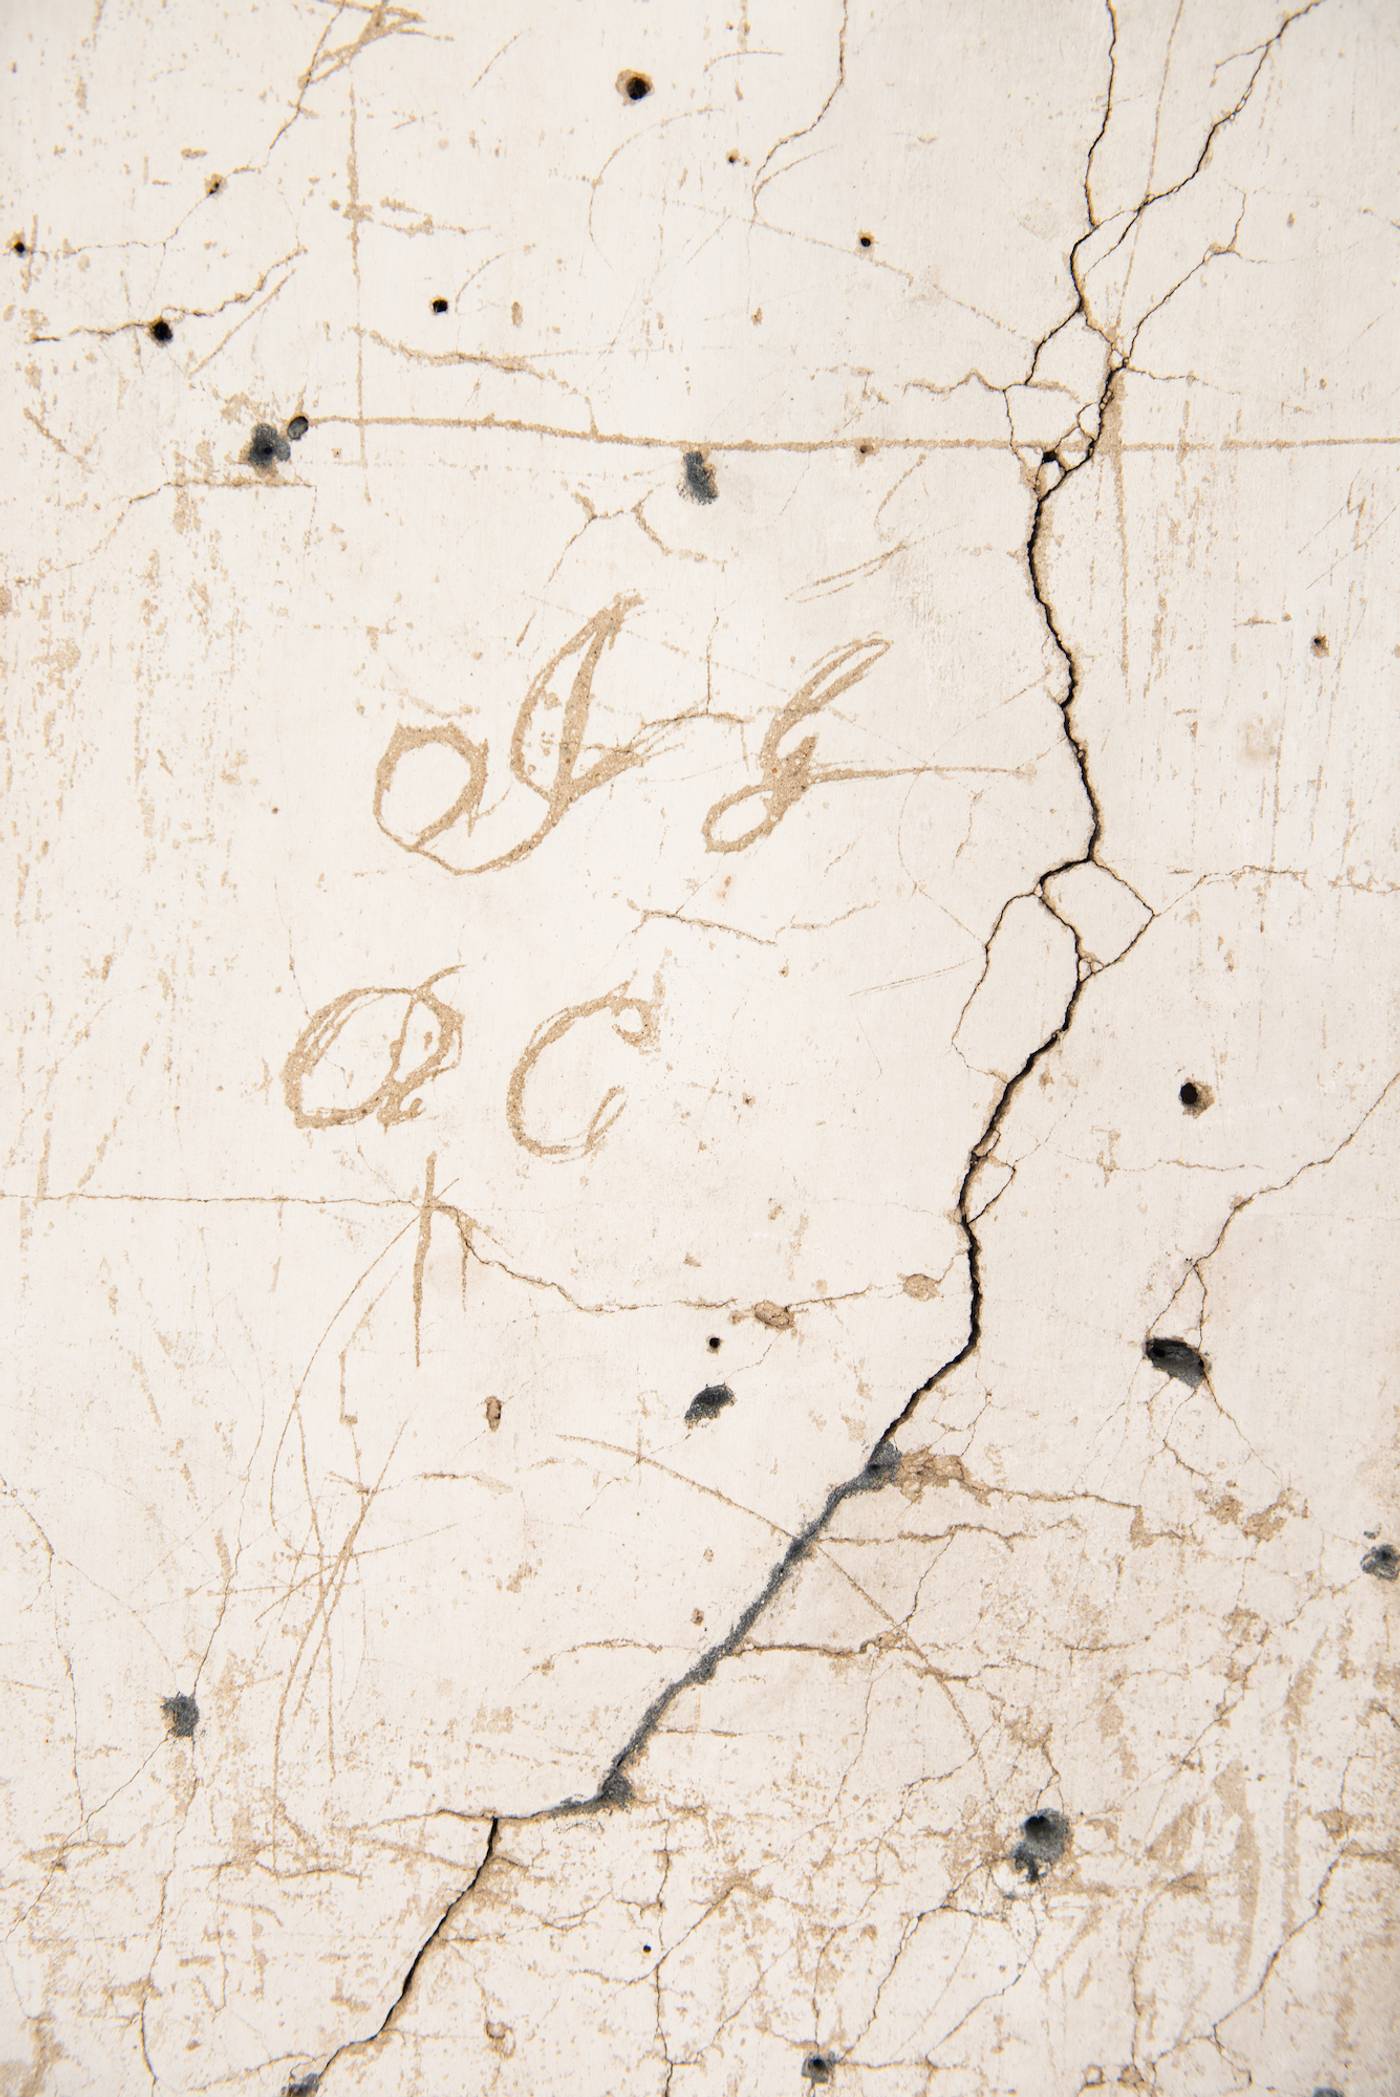 Cursive letters on old paper